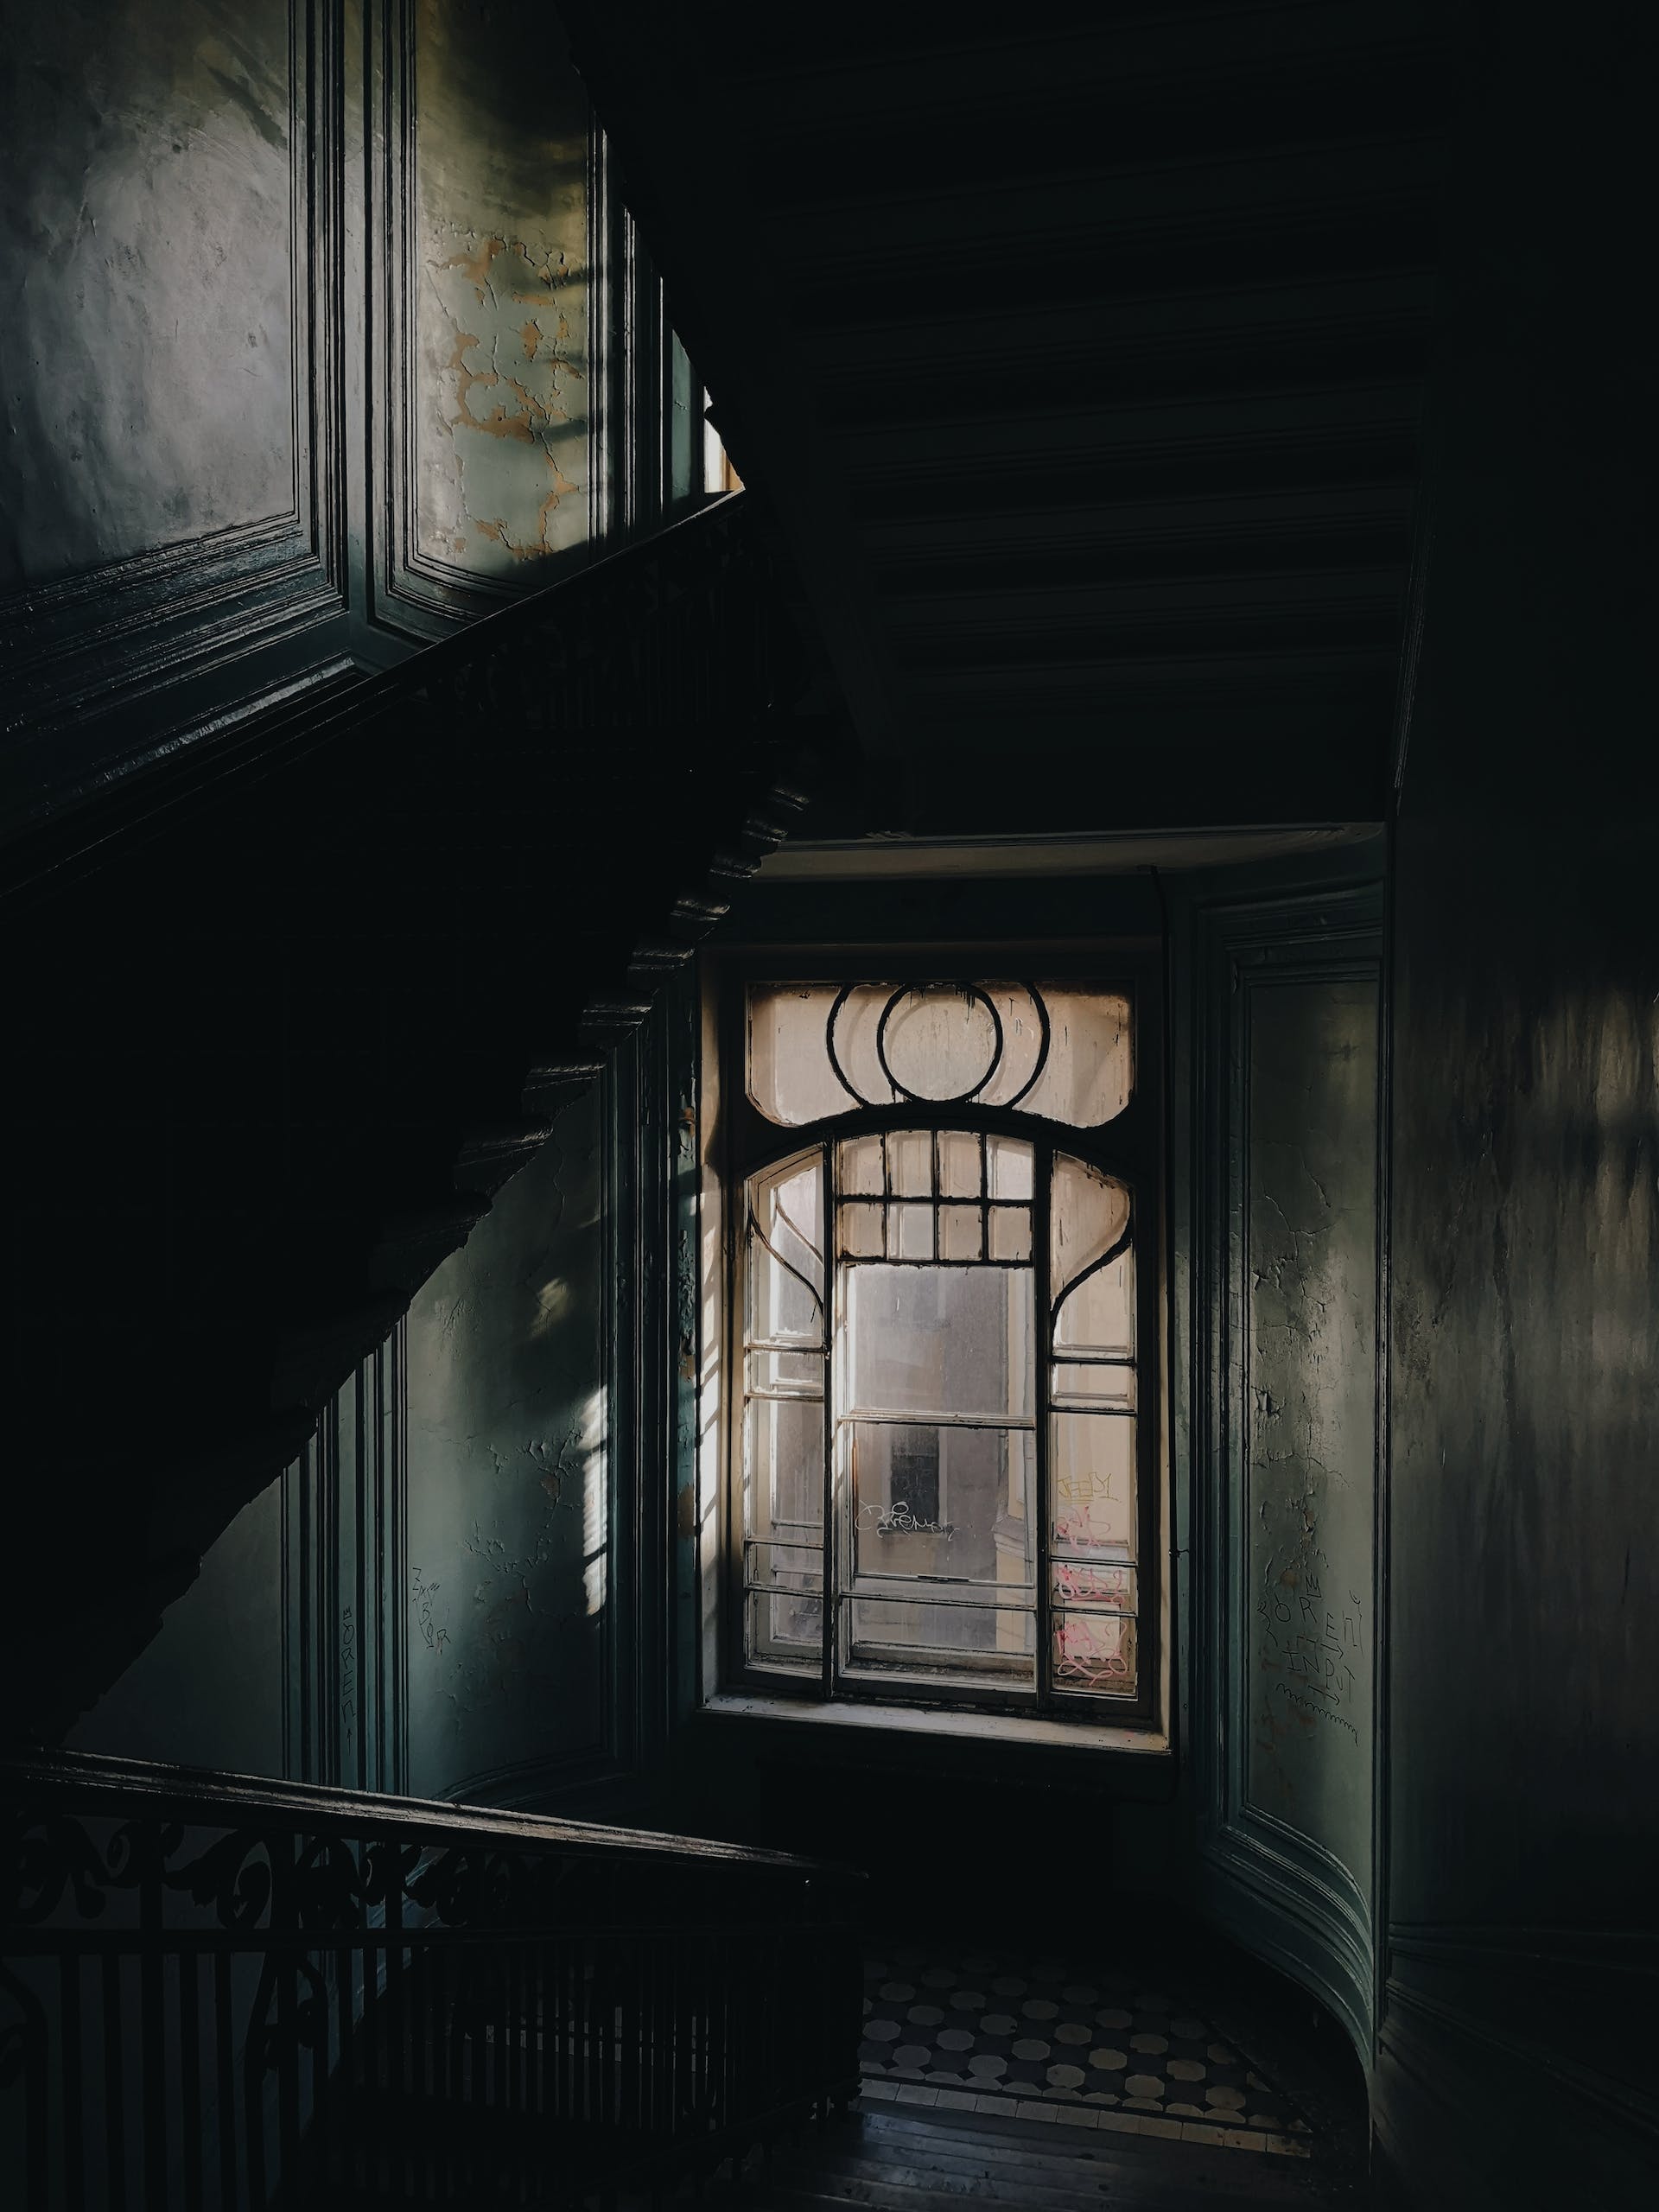 A dark staircase | Source: Pexels